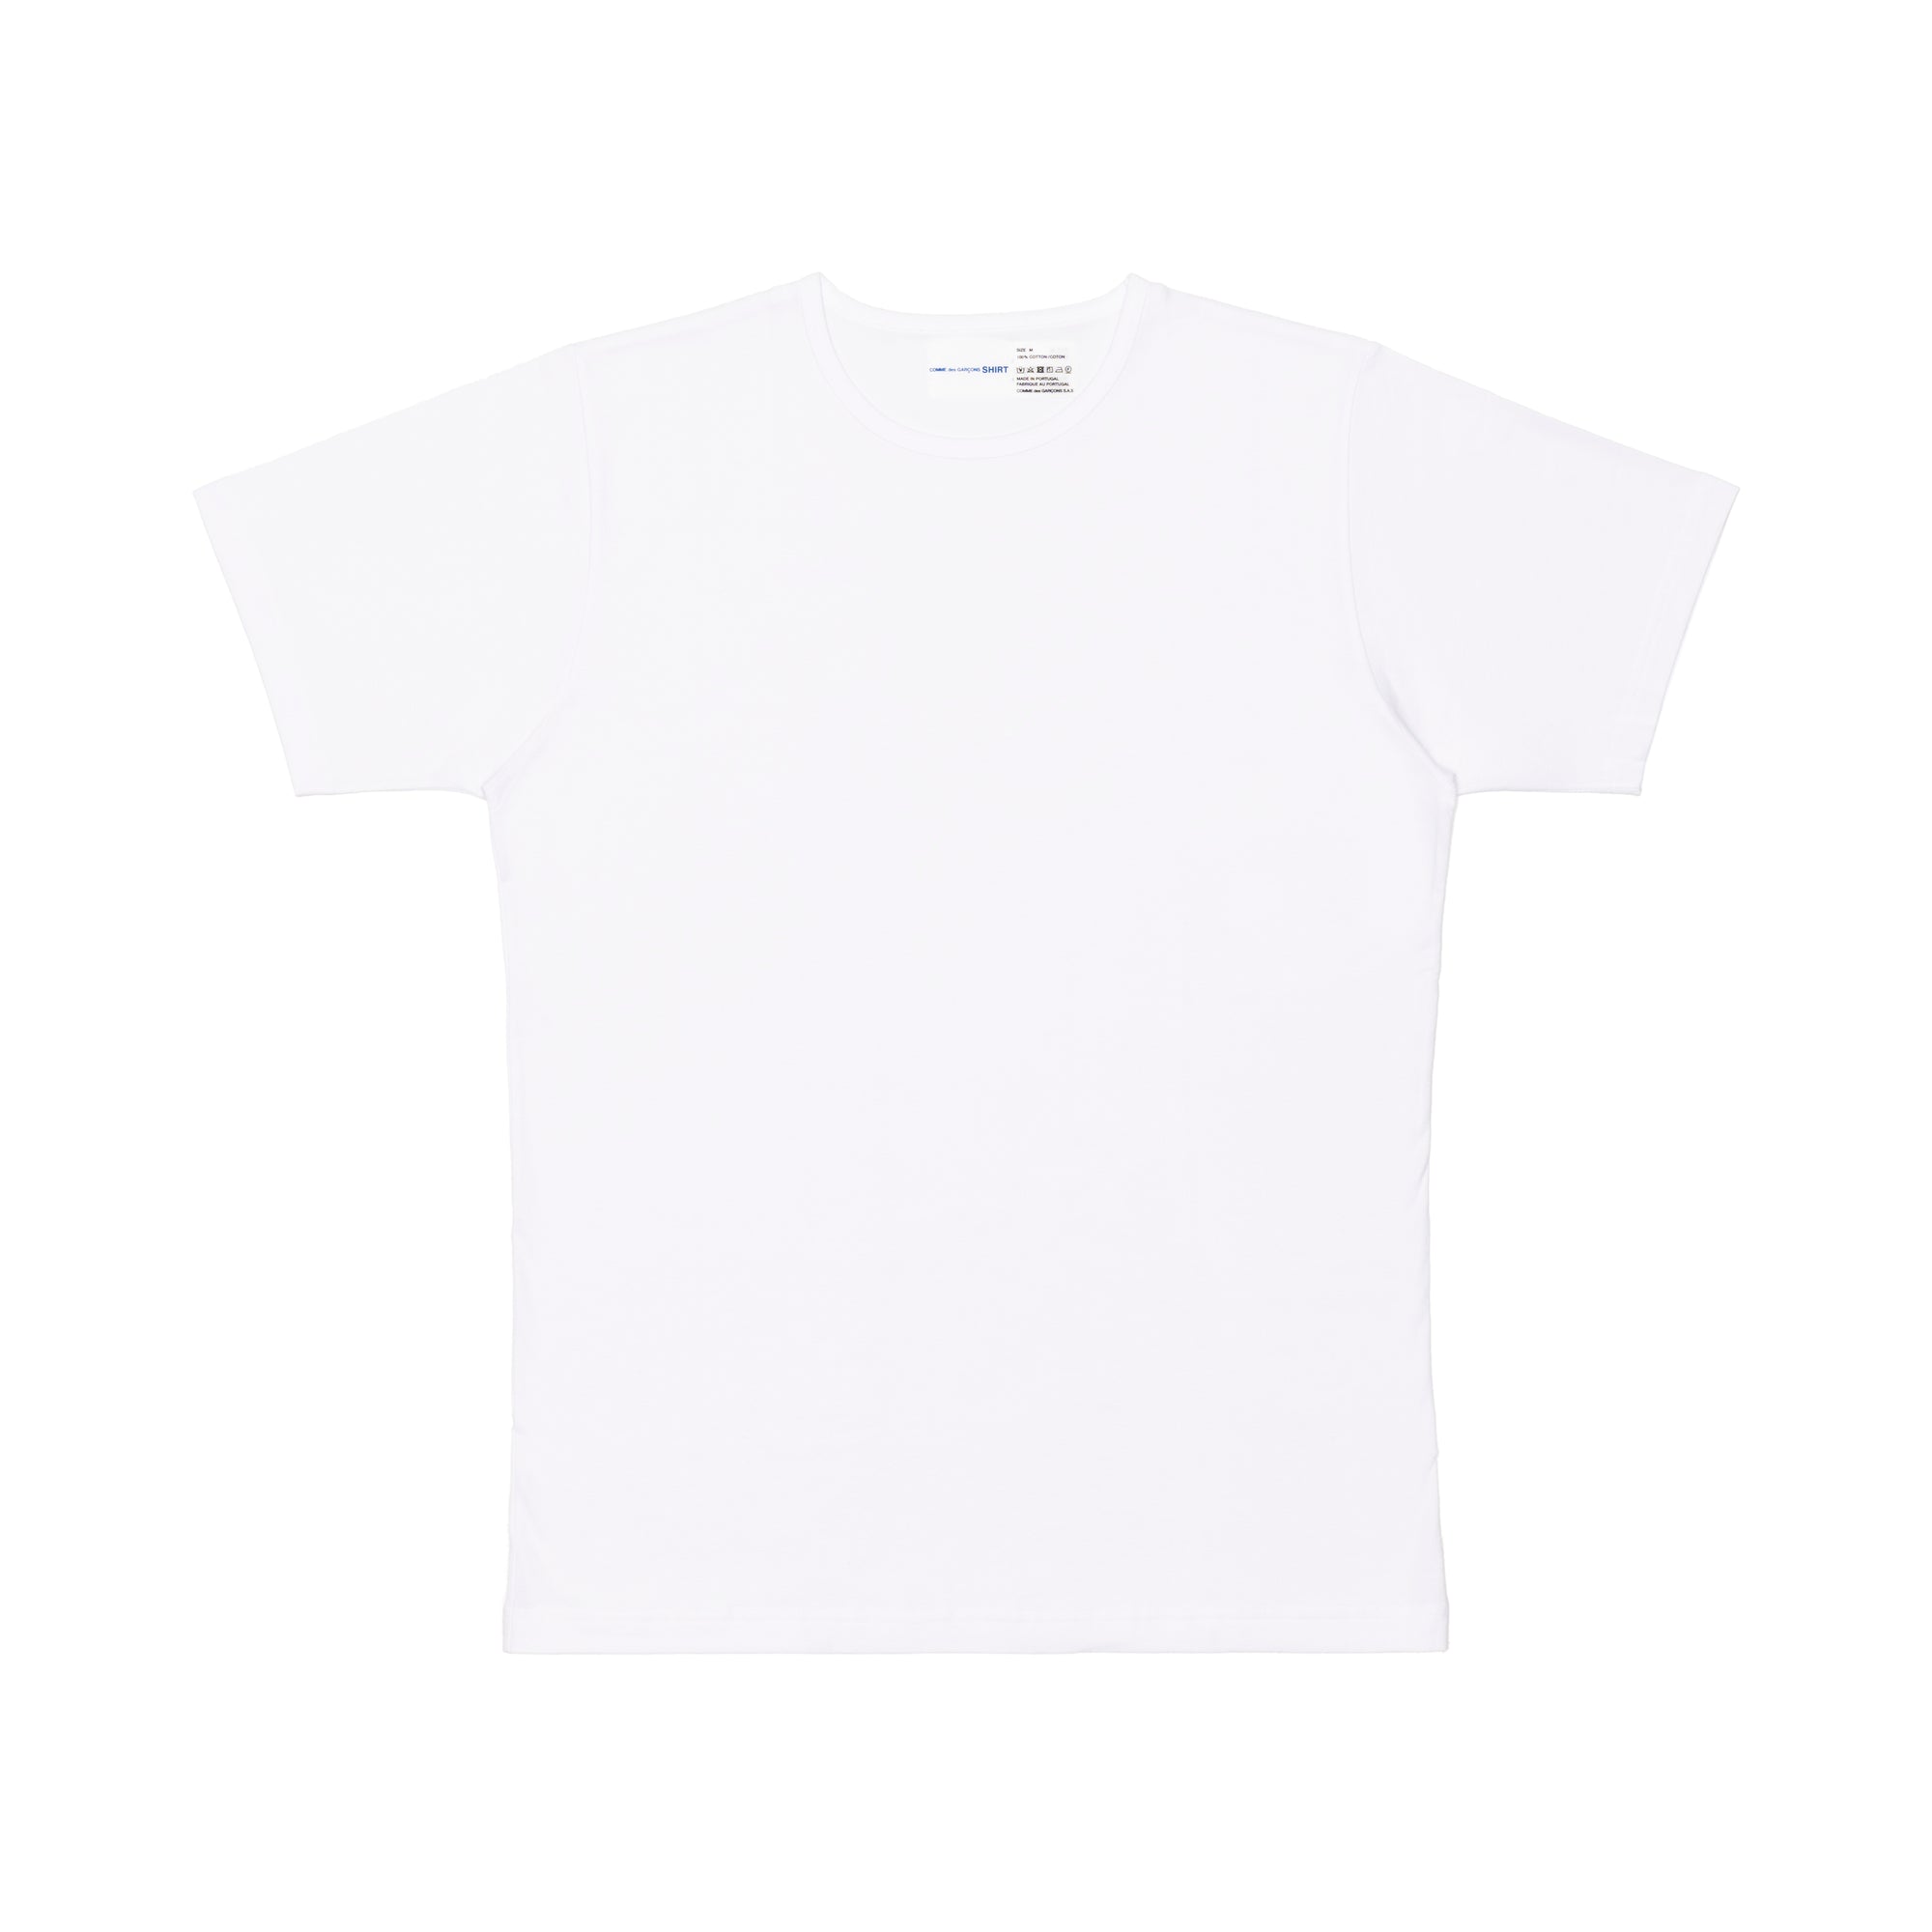 CDG SHIRT Underwear - Sunspel T-shirt - (White) view 1